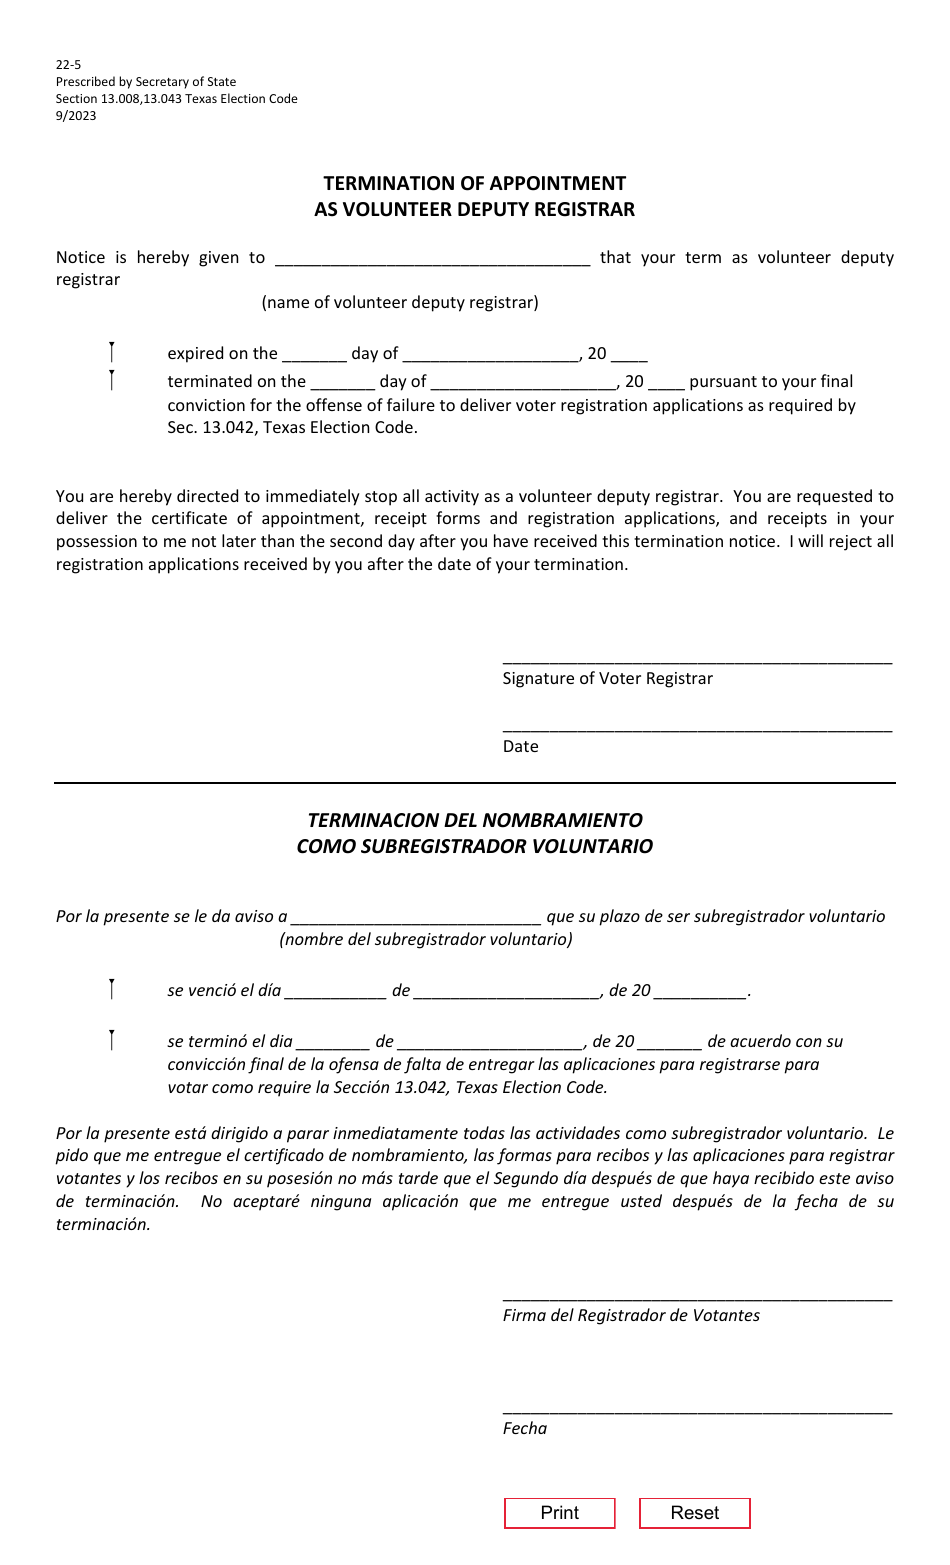 Form 22-5 Termination of Appointment as Volunteer Deputy Registrar - Texas (English / Spanish), Page 1